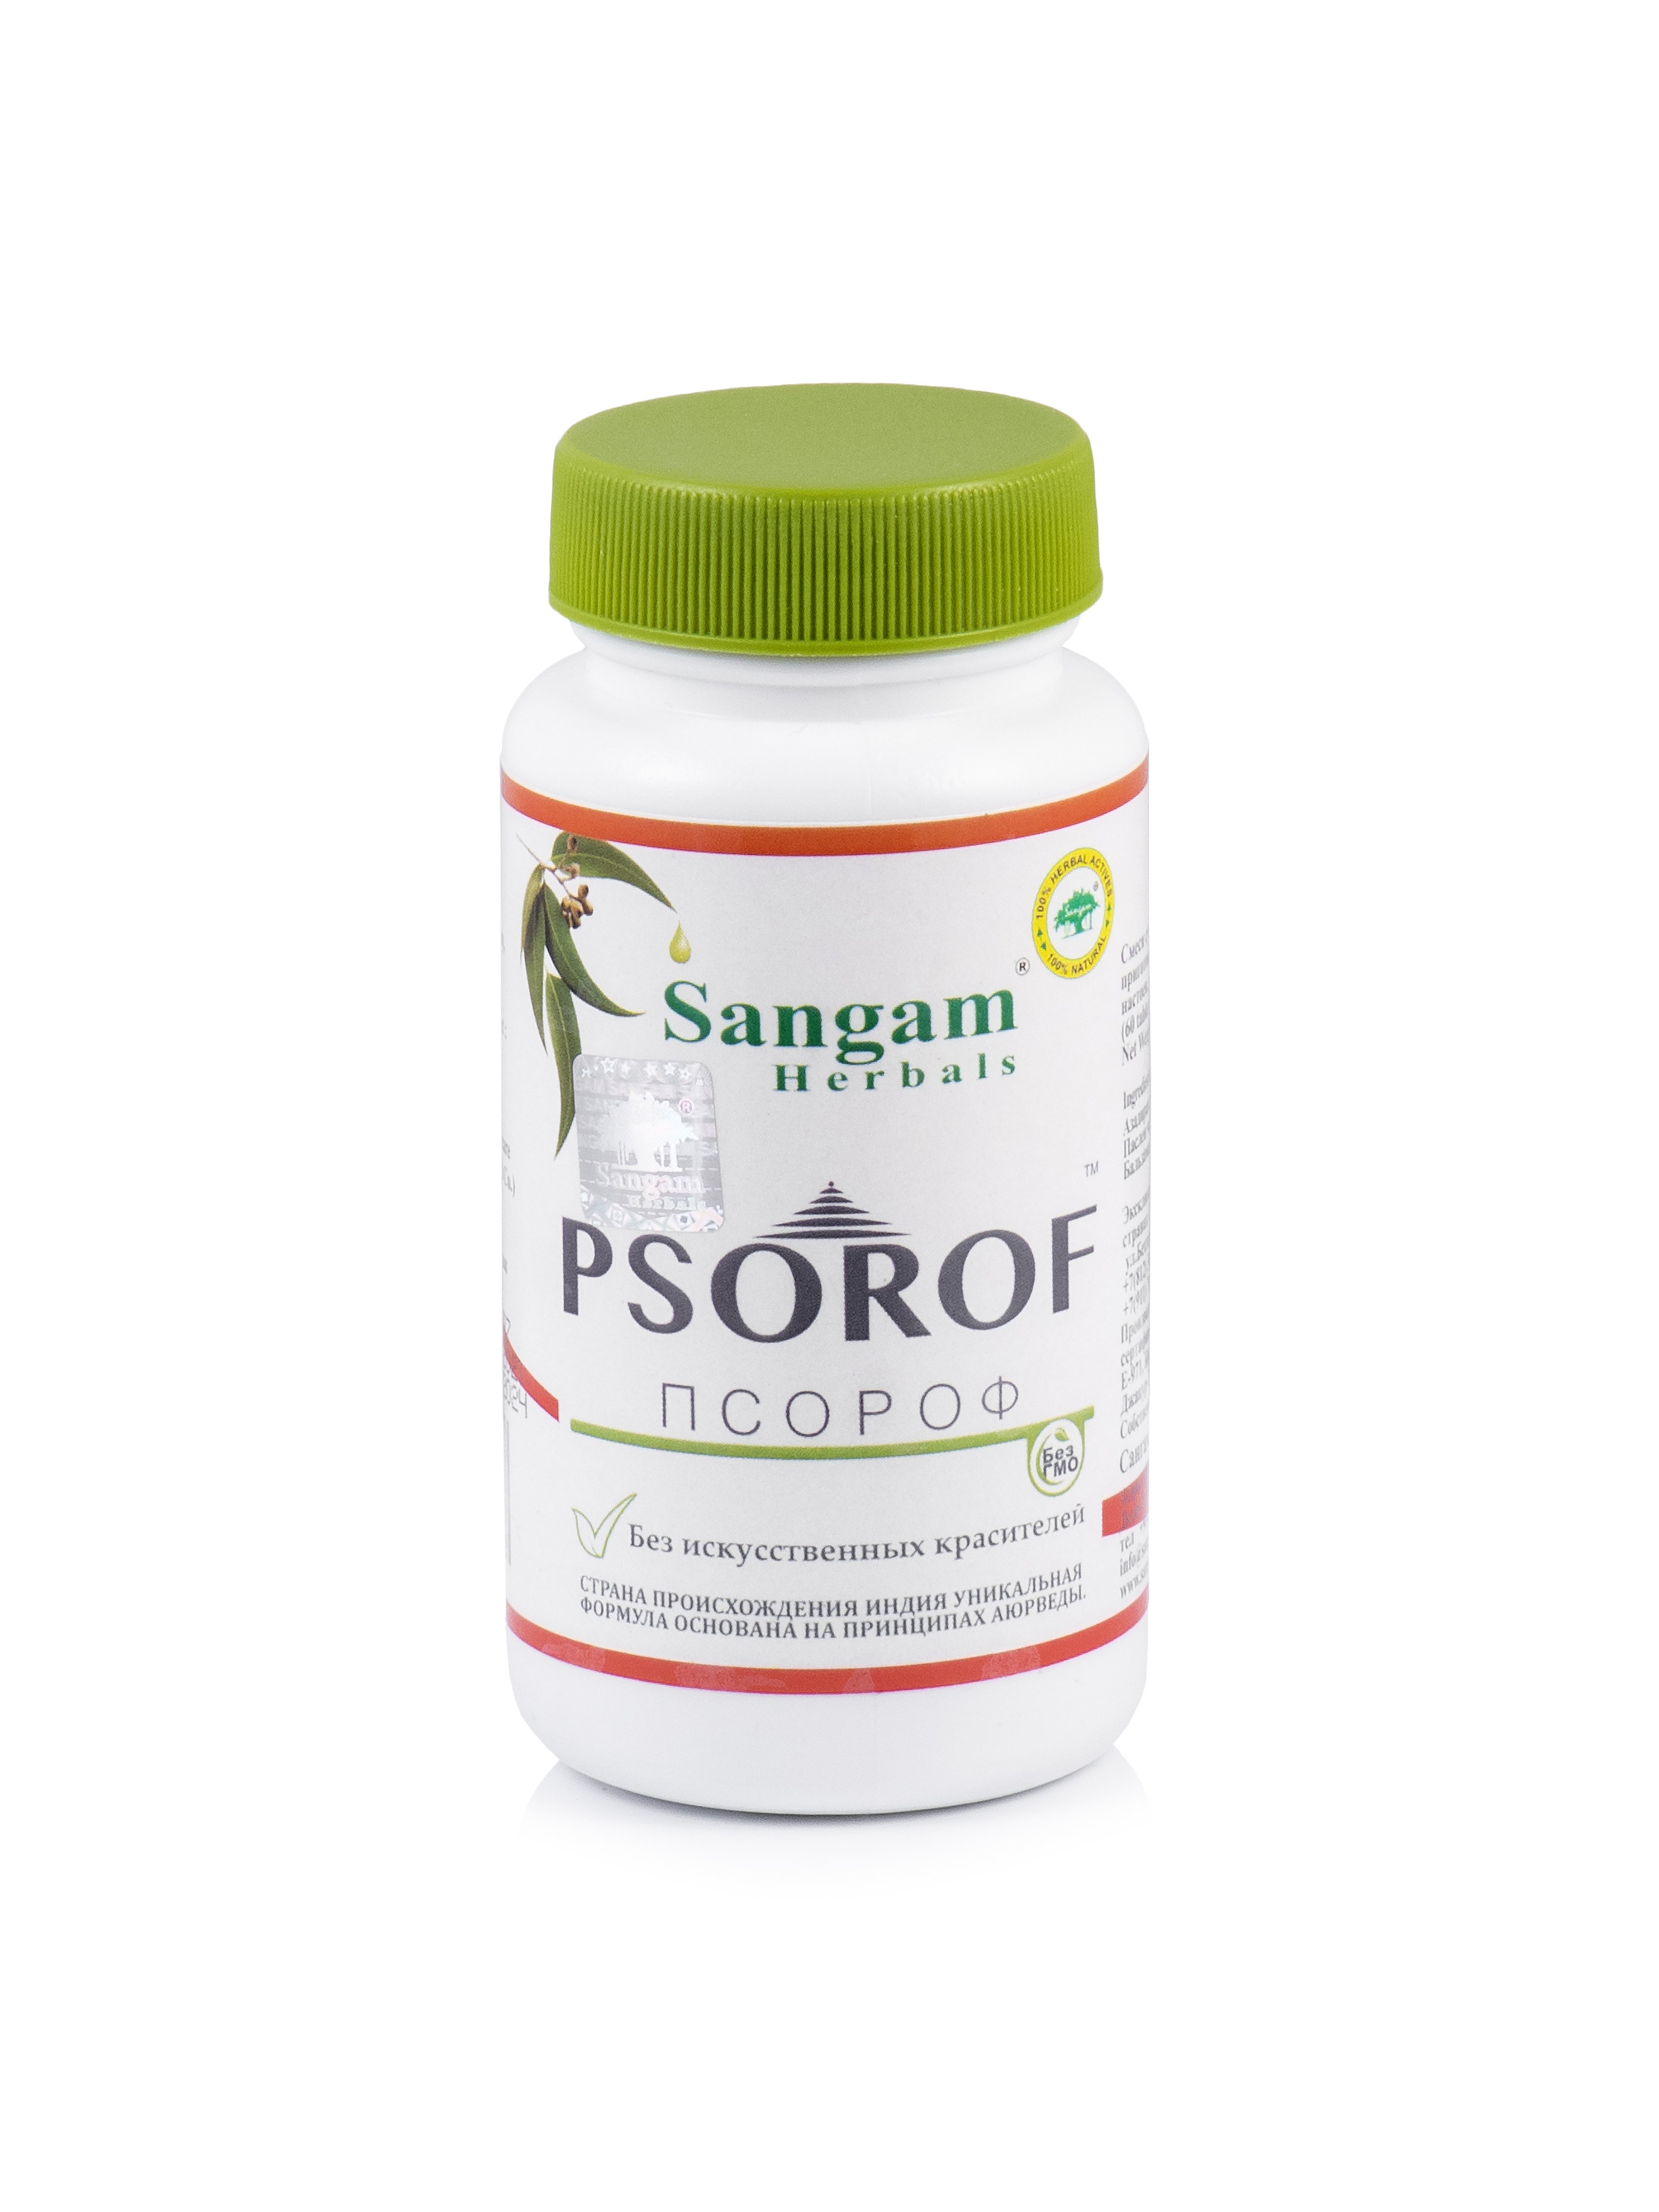 PSOROF, Sangam Herbals (ПСОРОФ, Сангам Хербалс), 60 таб. по 750 мг.